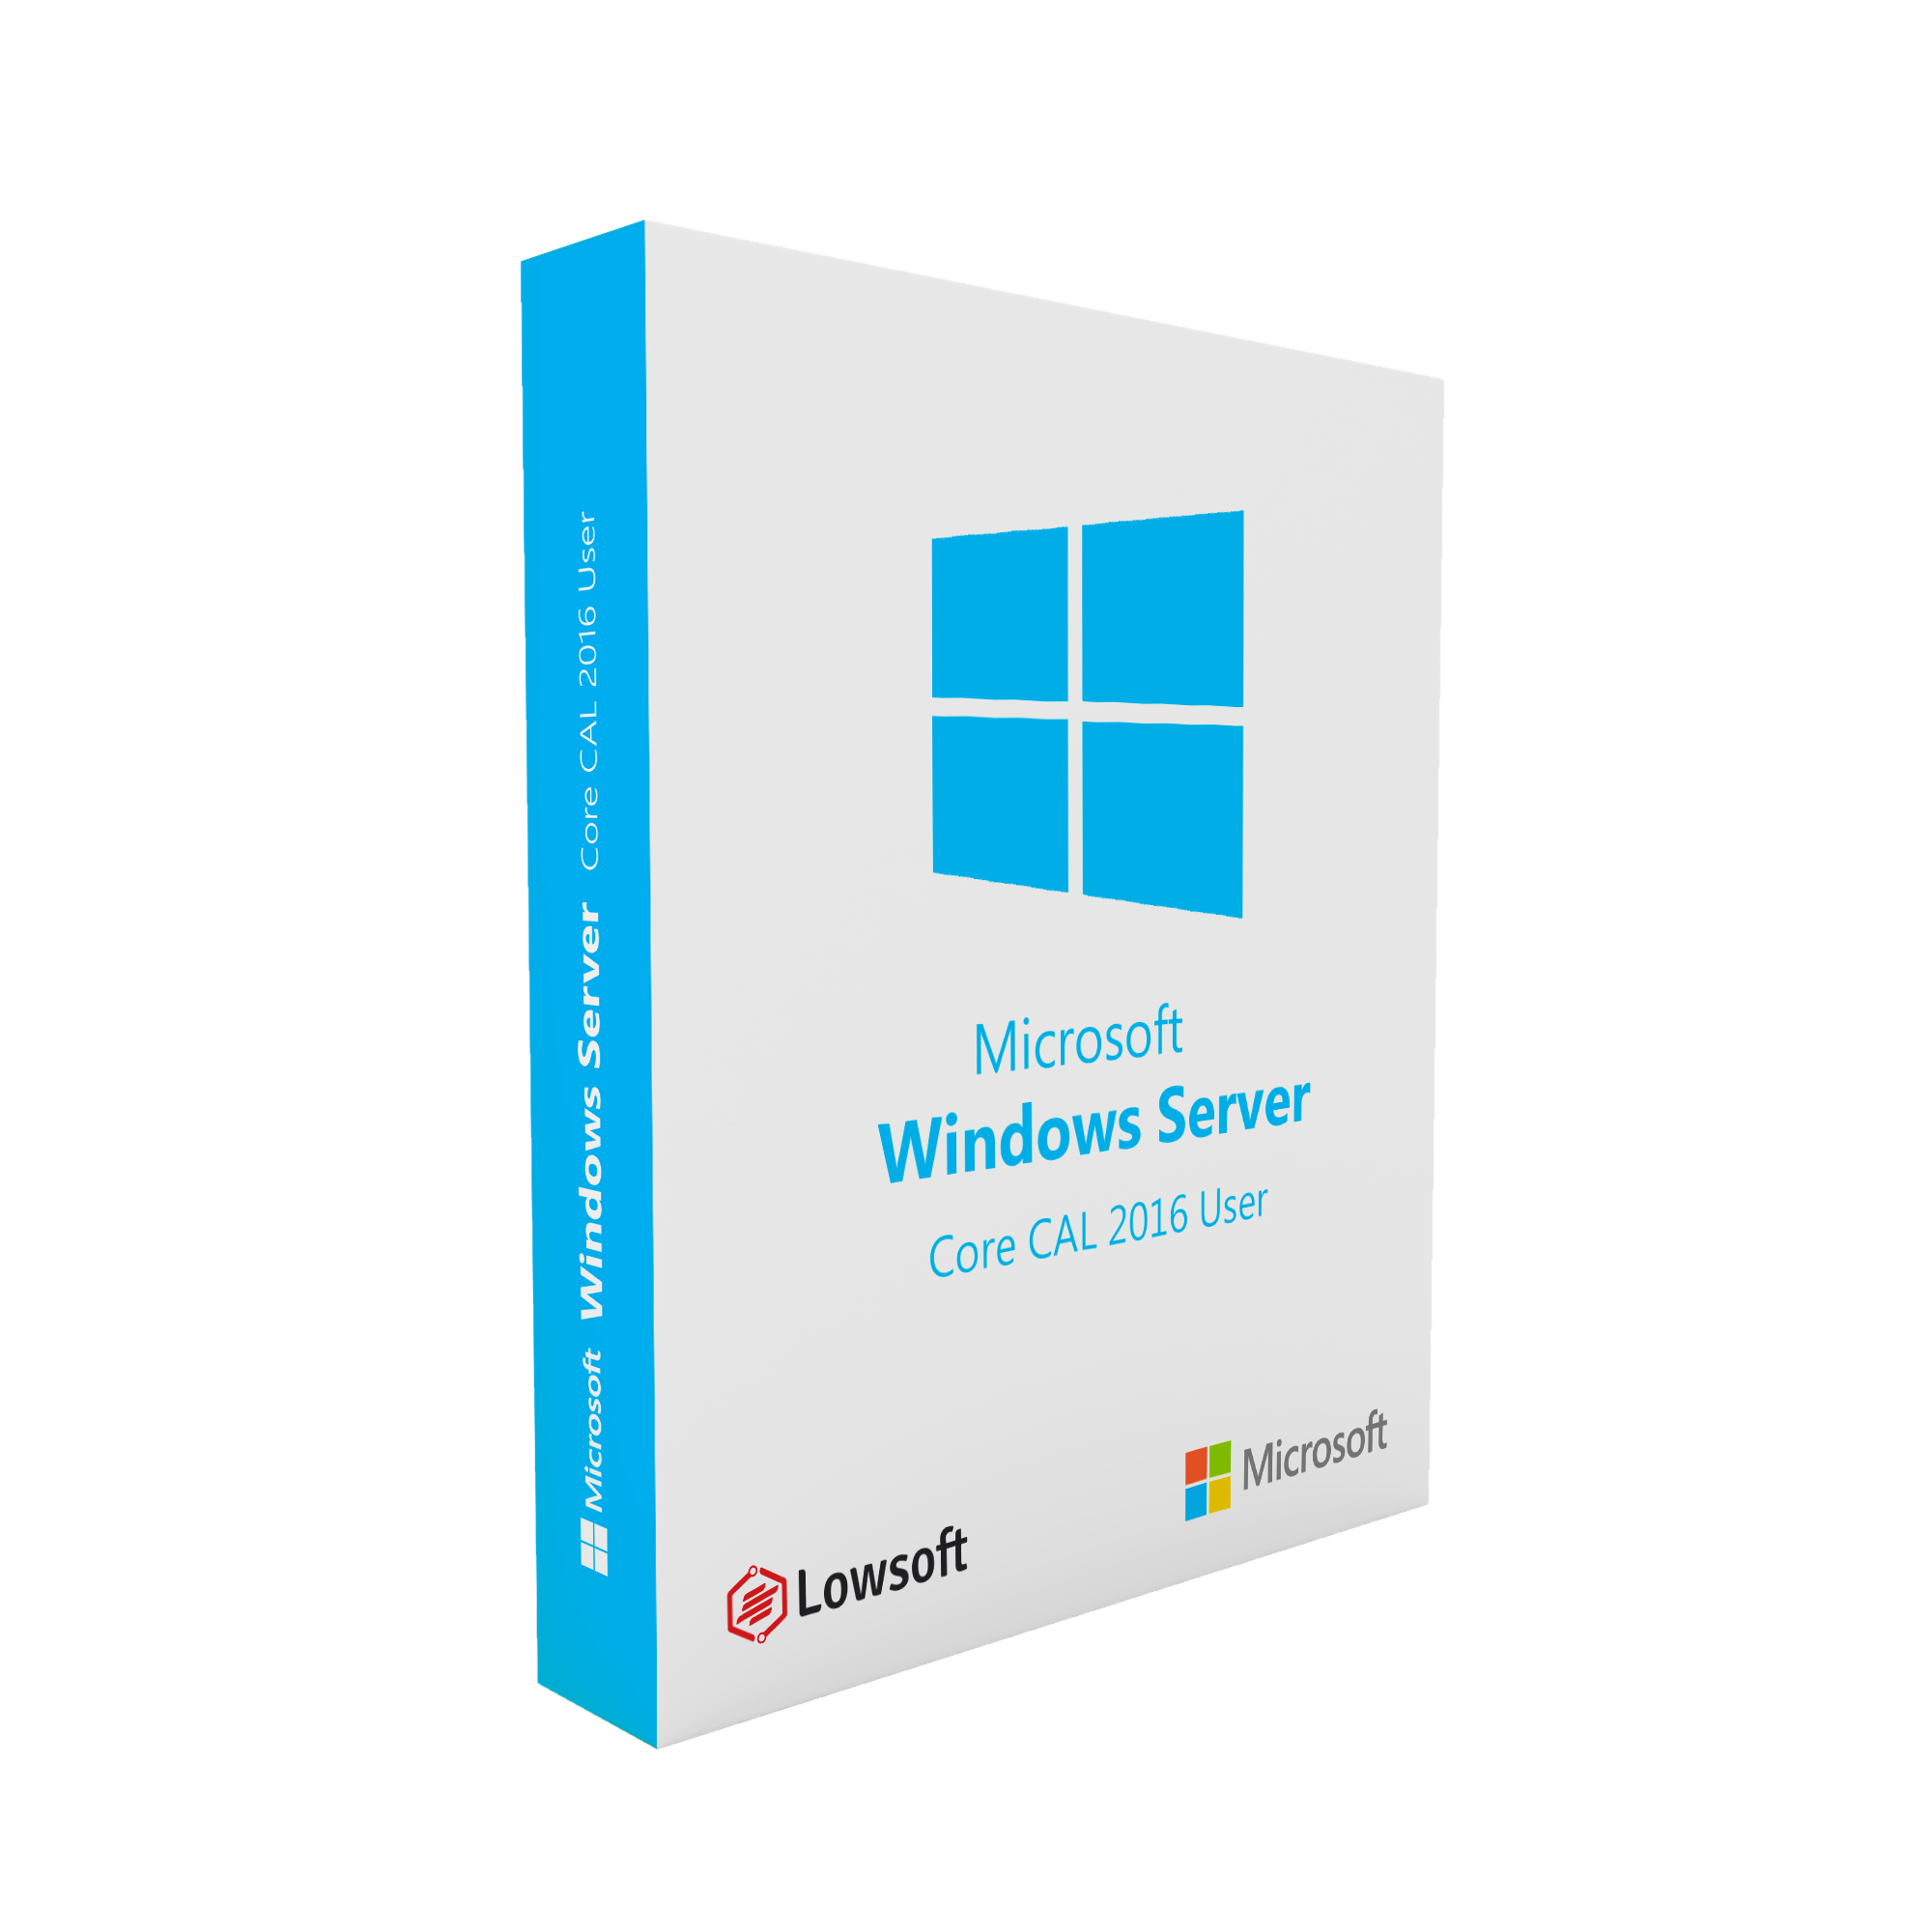 Windows Server Core CAL 2016 User